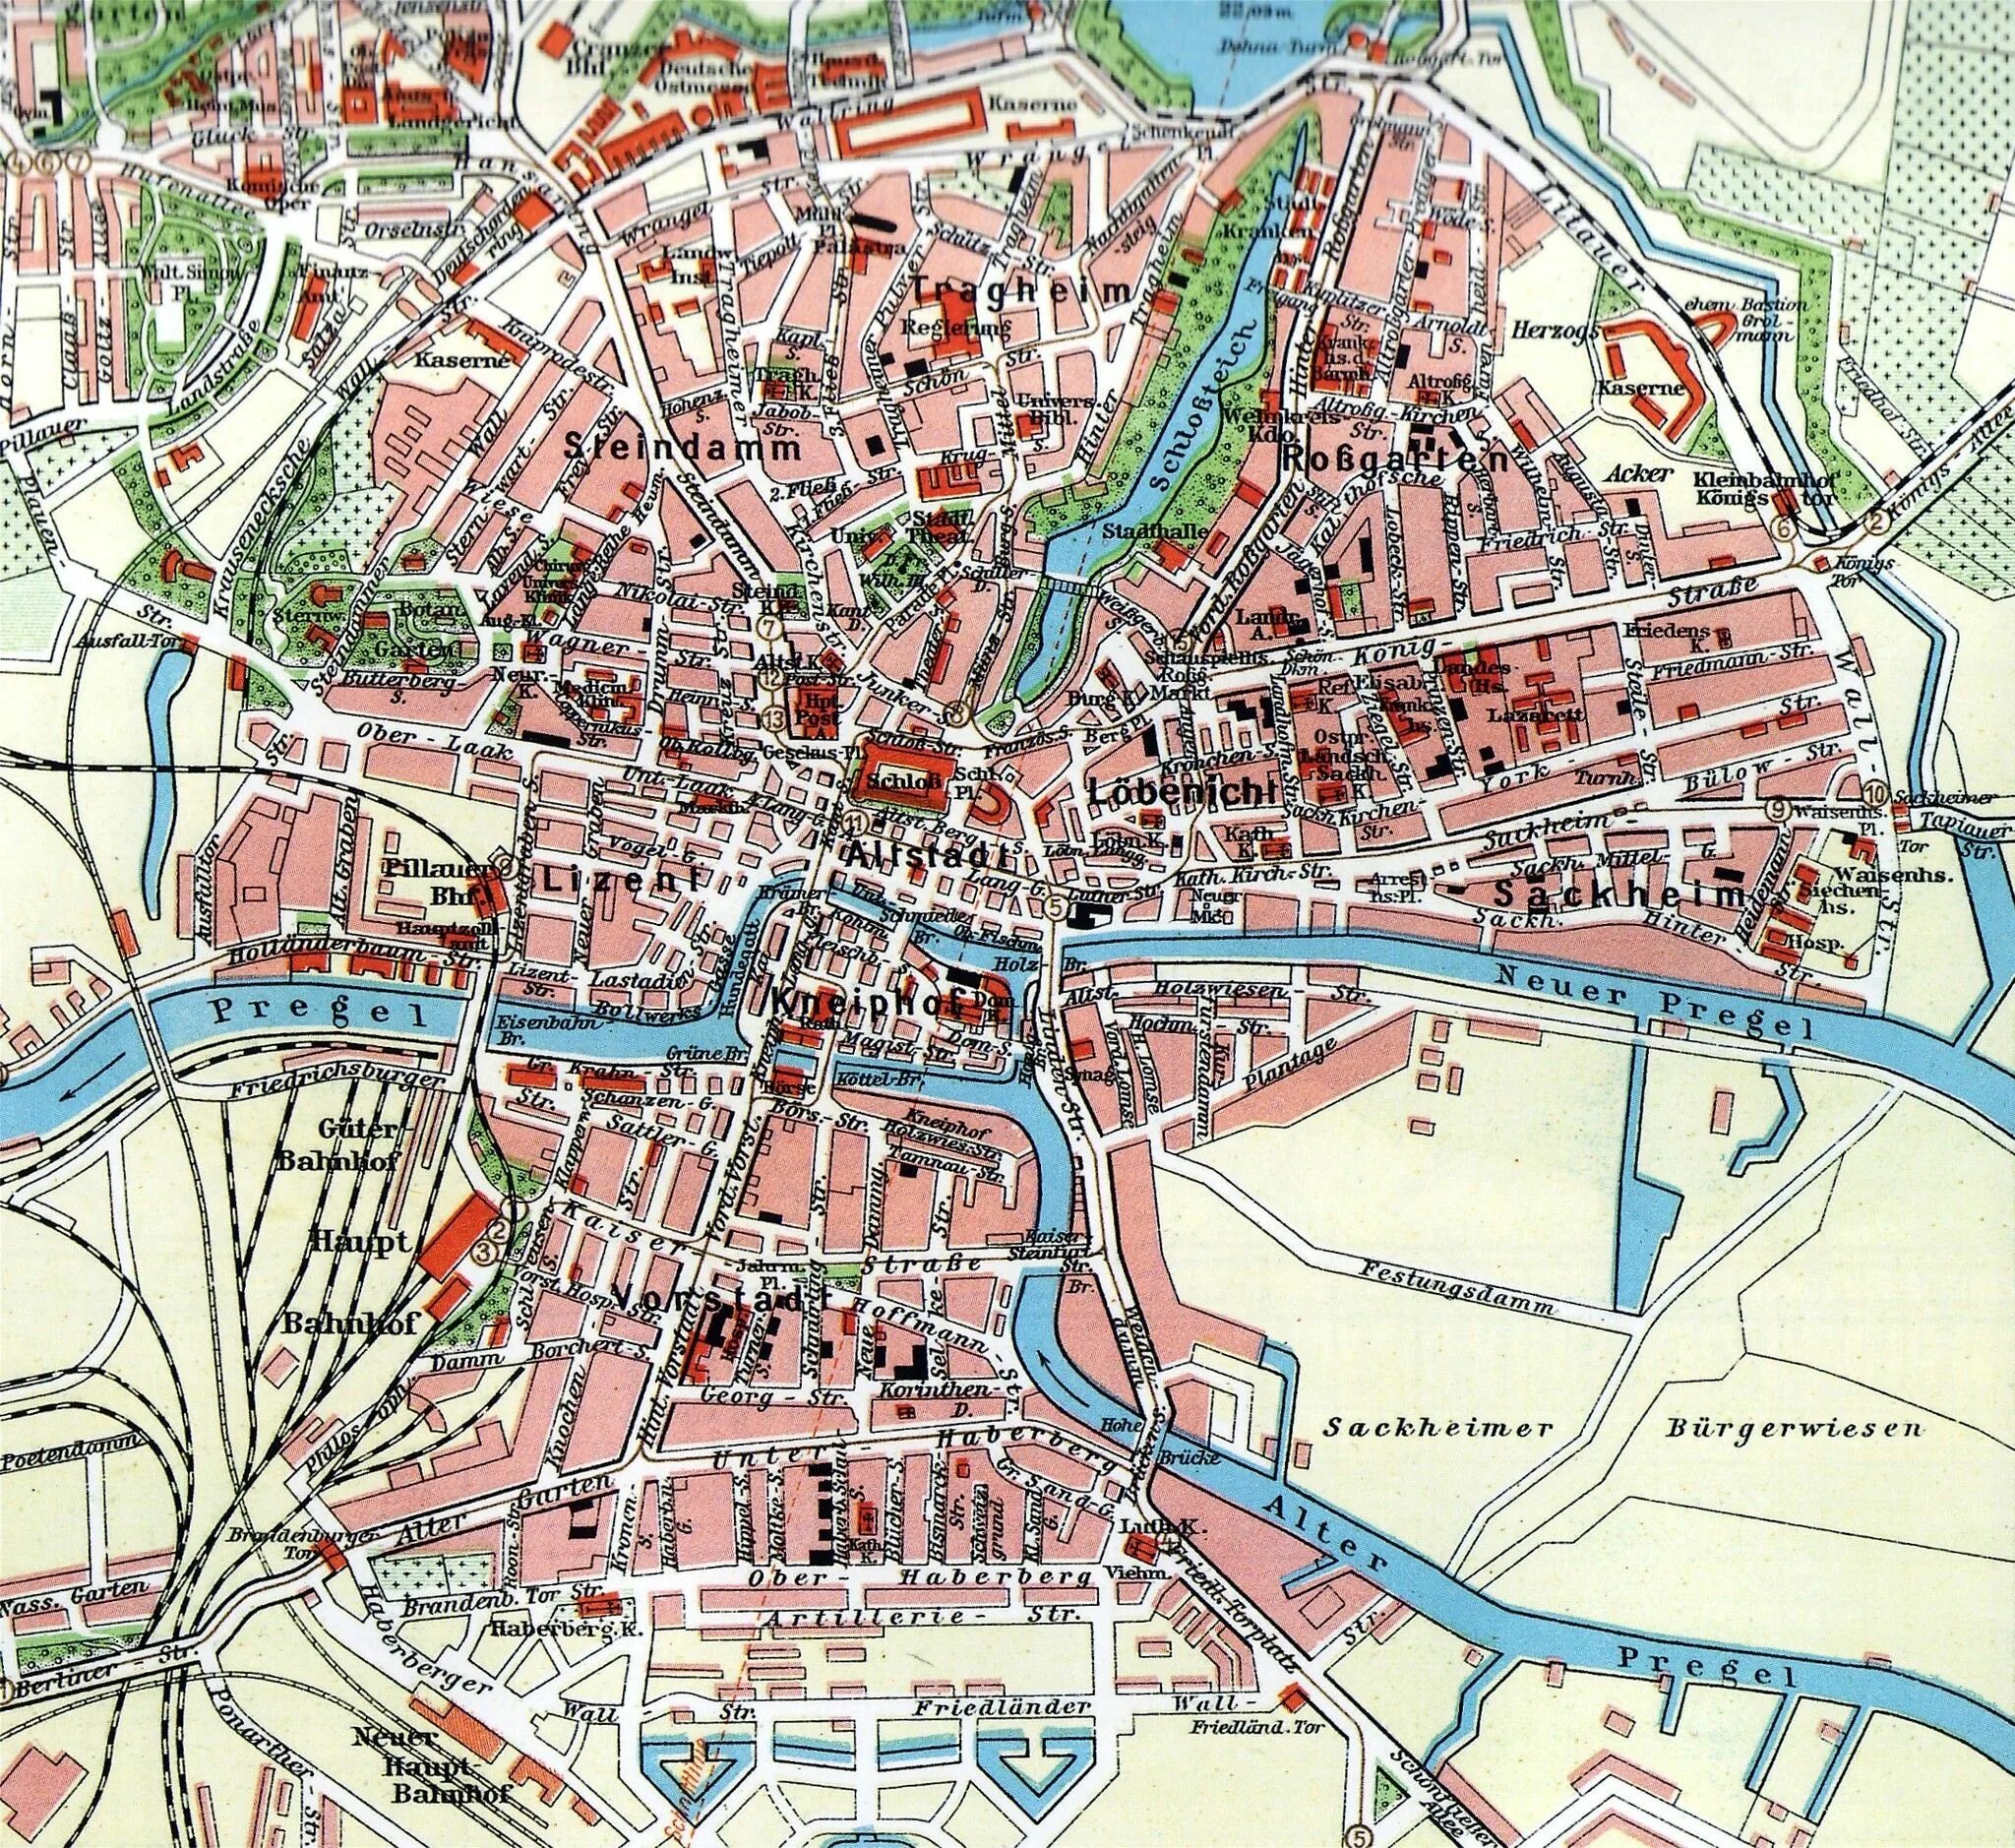 Кенигсберг на карте. Карта улиц Кенигсберга. Кенигсберг город на карте. Кёнигсберг Калининград на карте. Подпишите на карте город кенигсберг